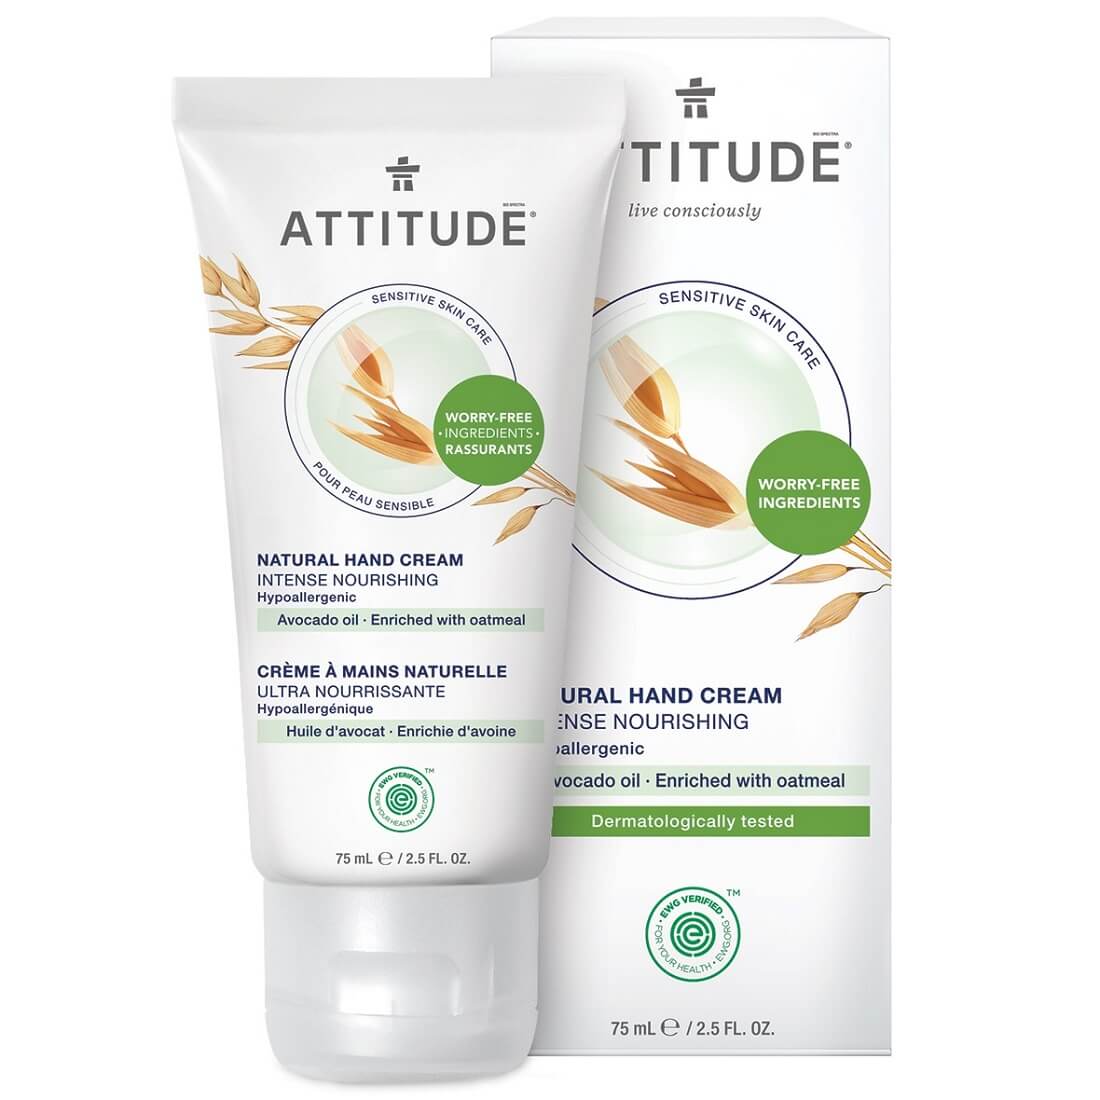 Product label for ATTITUDE Sensitive Skin Natural Hand Cream - Intense Nourishing - Avocado Oil (75 mL)